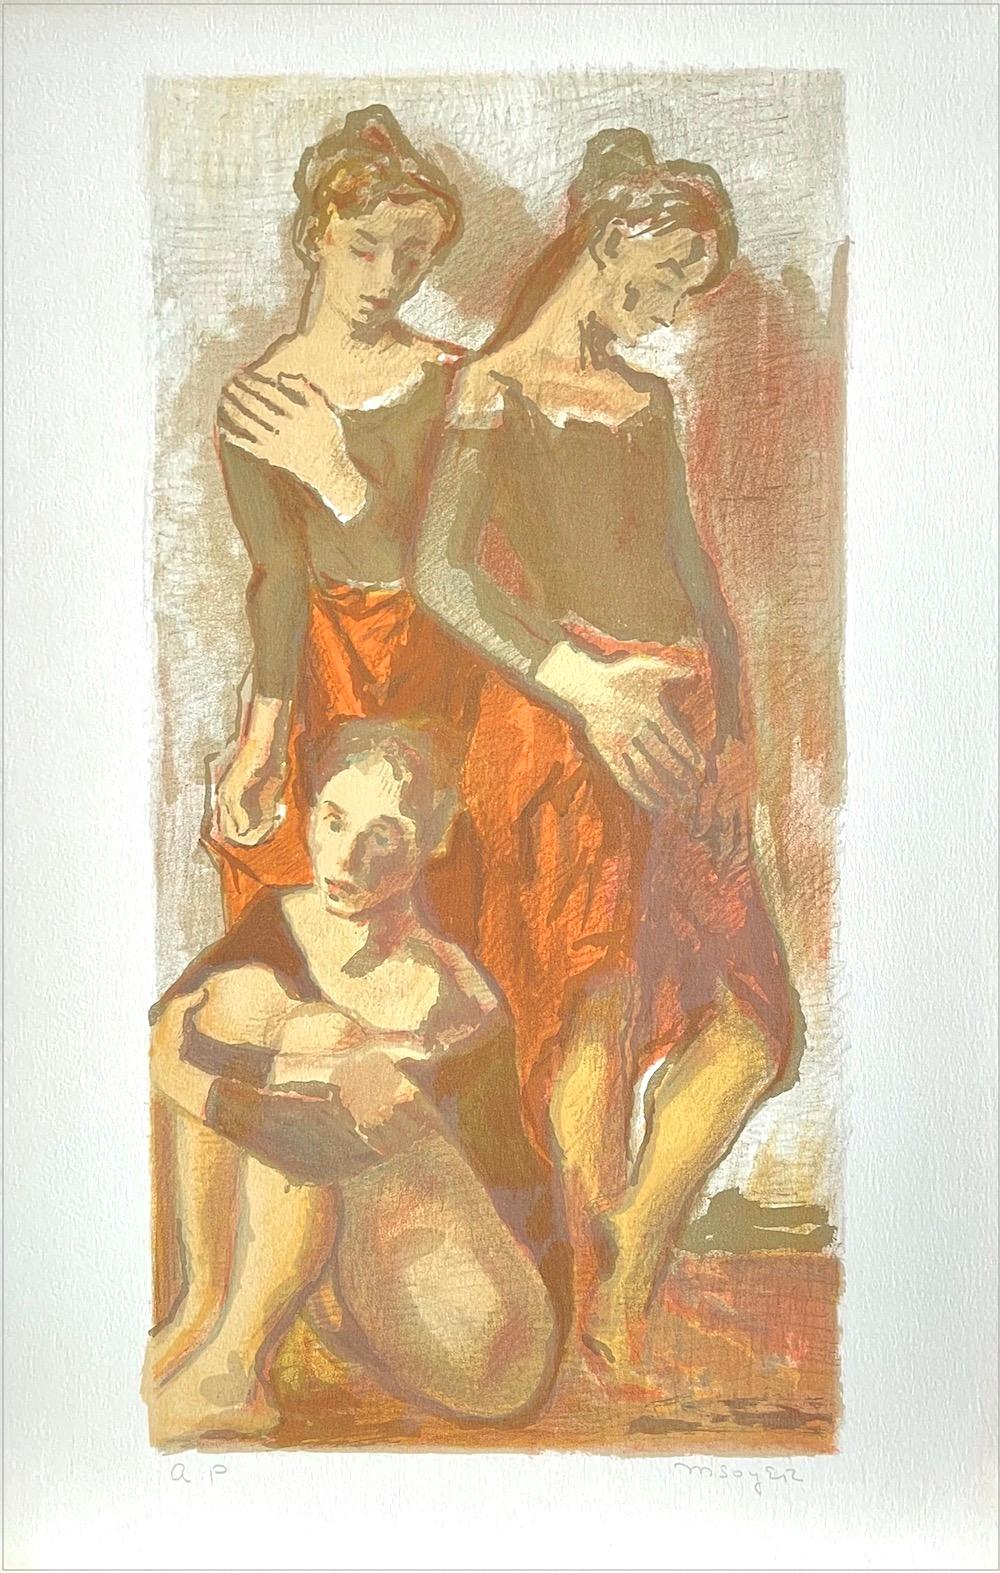 Moses Soyer Figurative Print - THREE BALLET DANCERS Signed Original Lithograph, Dance Portrait, Orange, Khaki